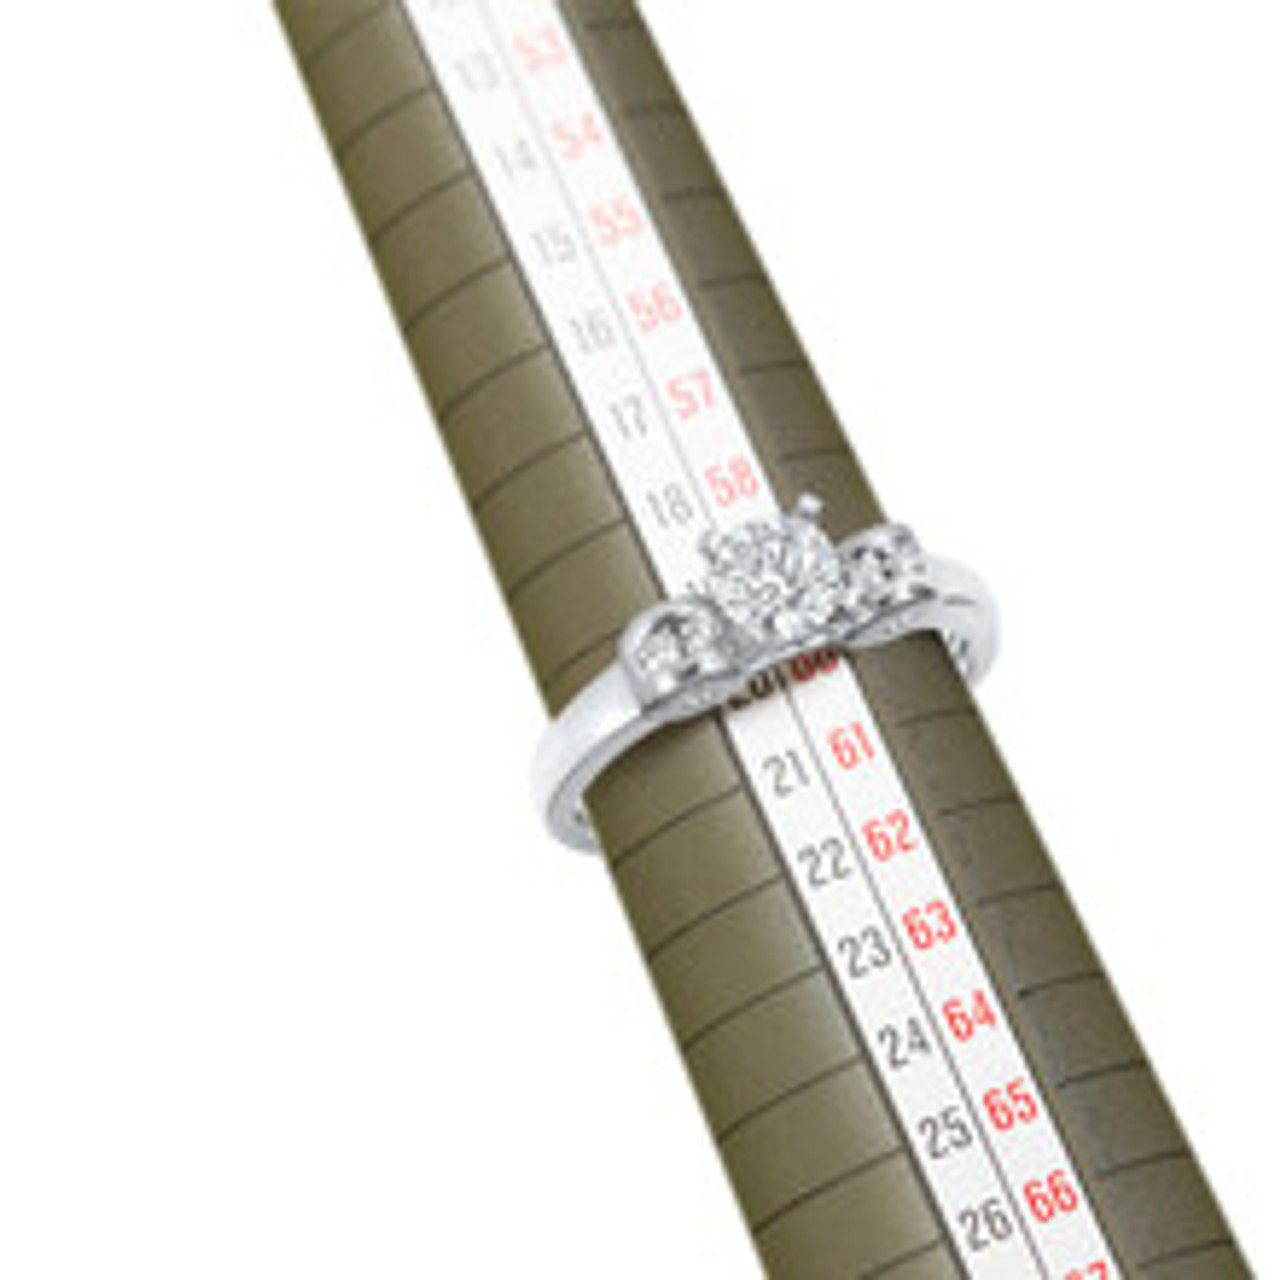  COHEALI 36 Sheets Ring Size Adjustment Ring Sizer